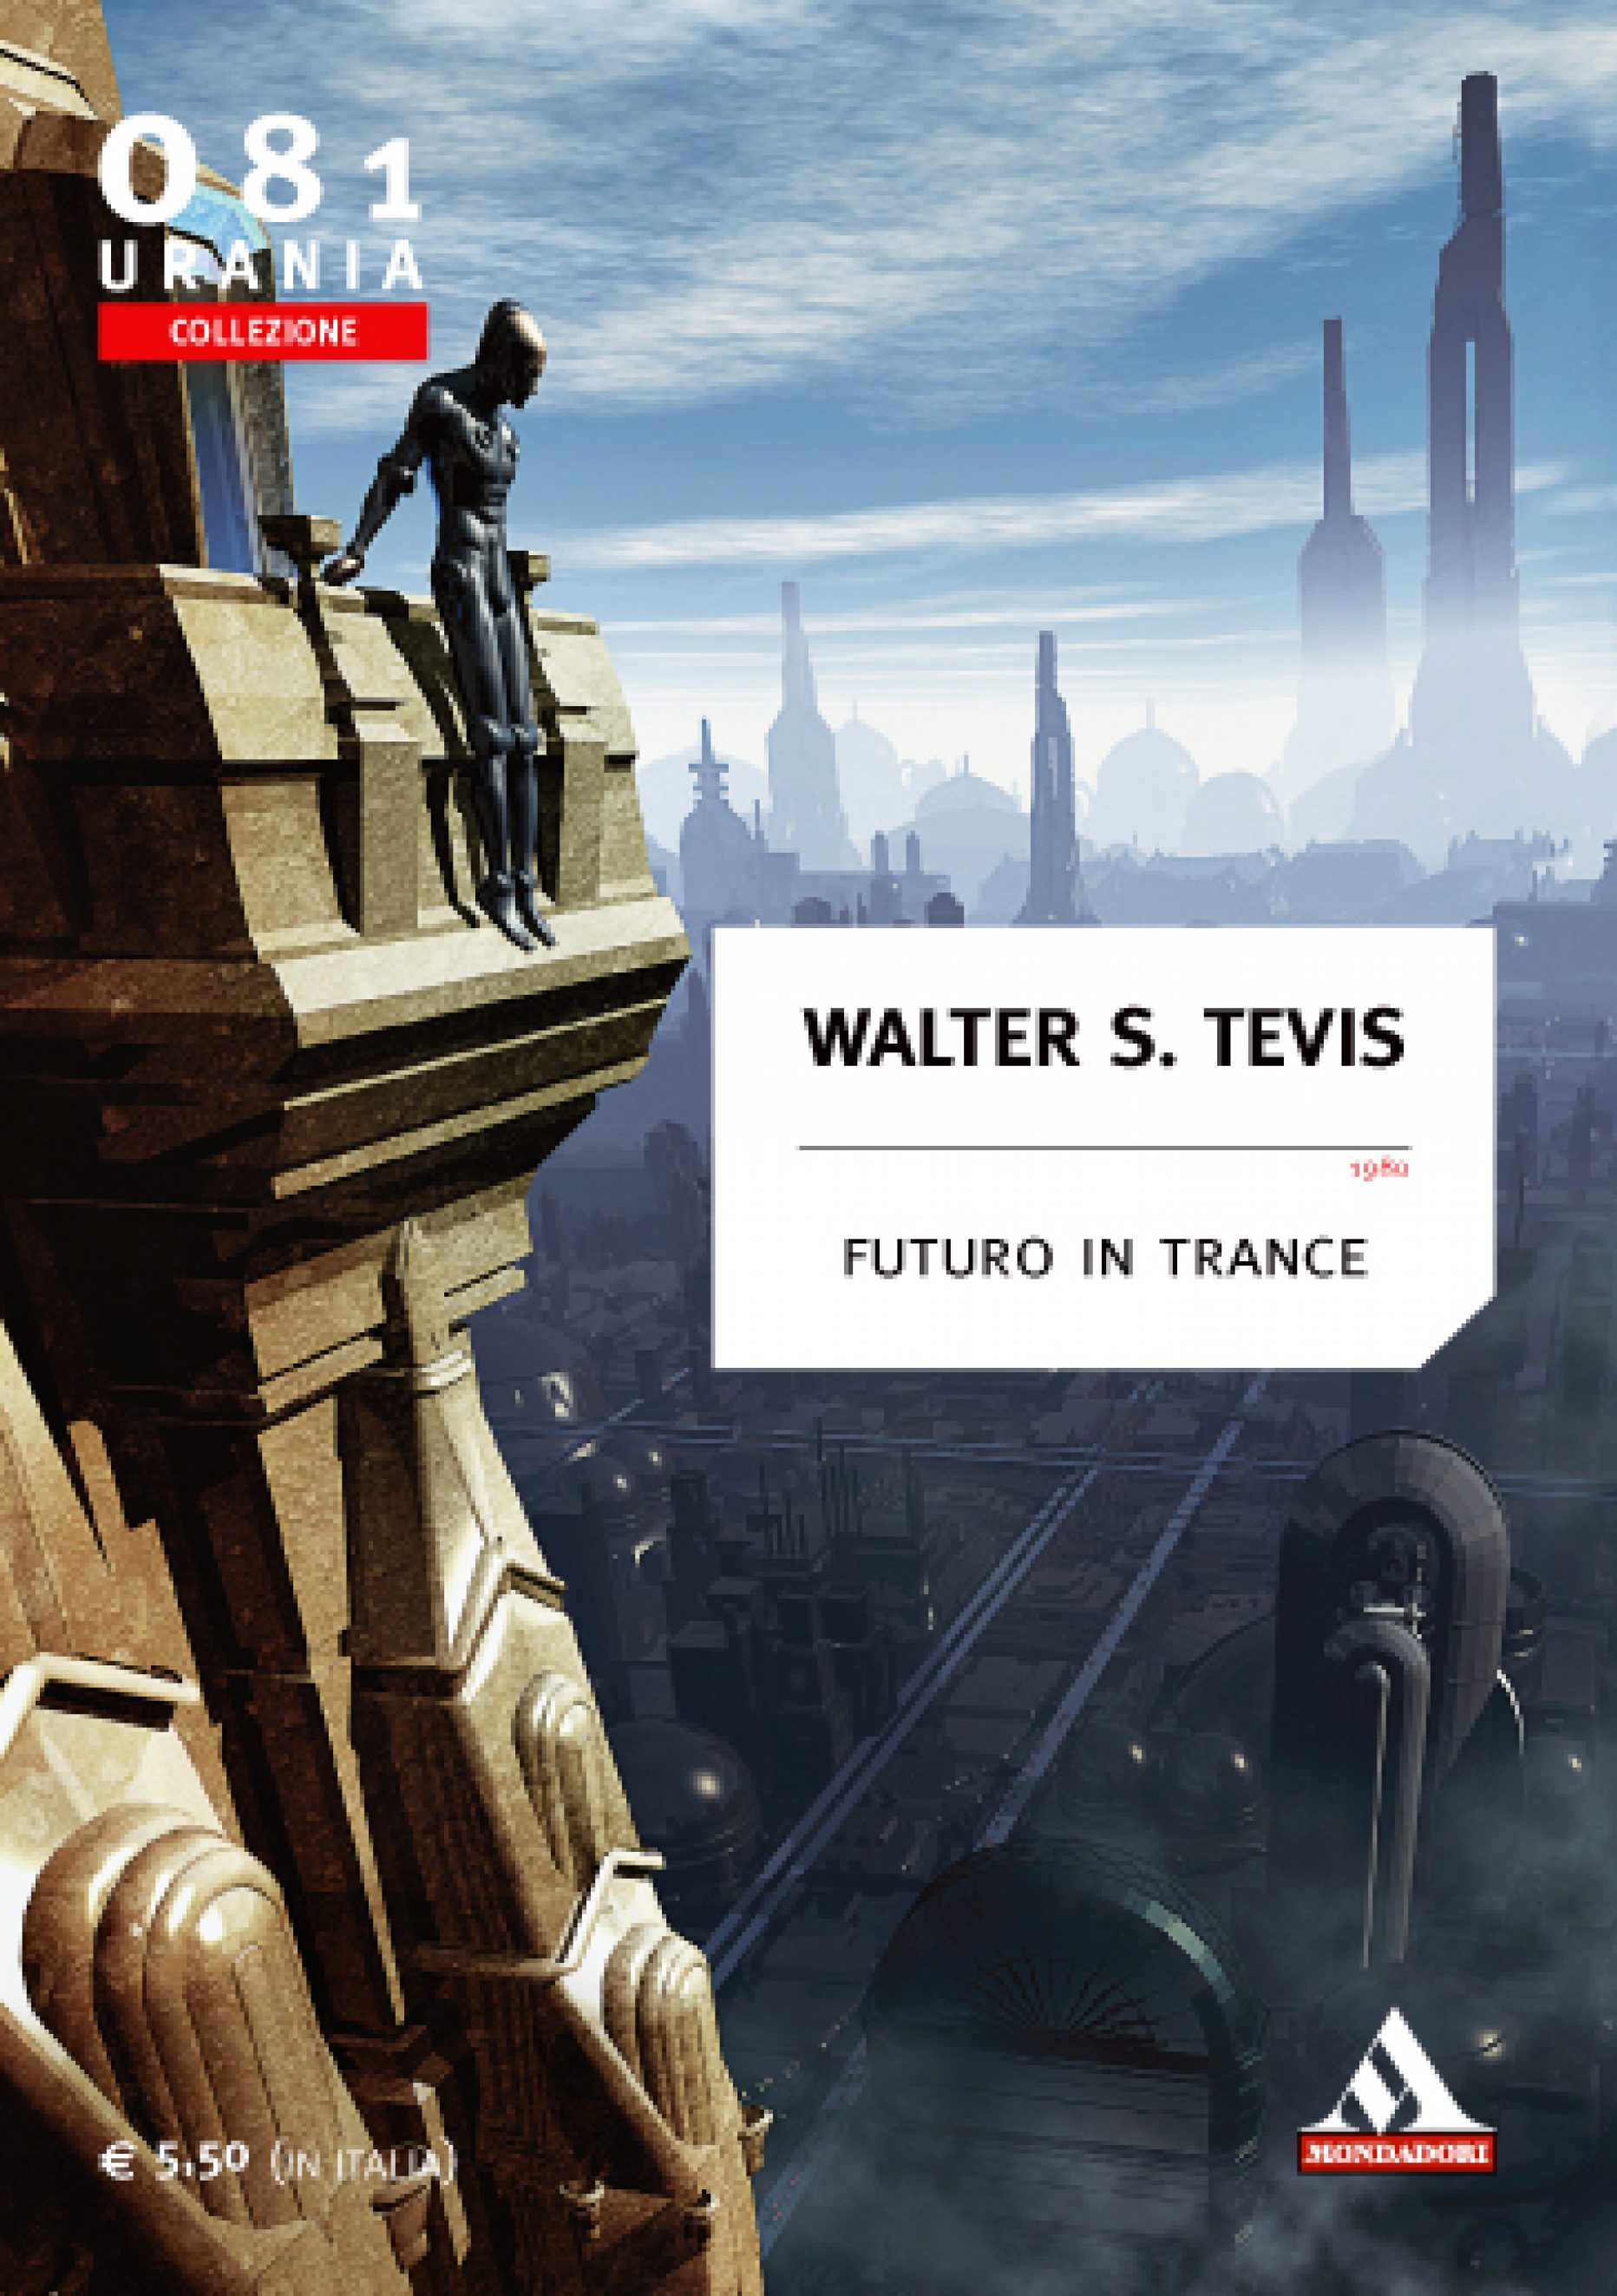 Walter S. Tevis – Futuro in trance